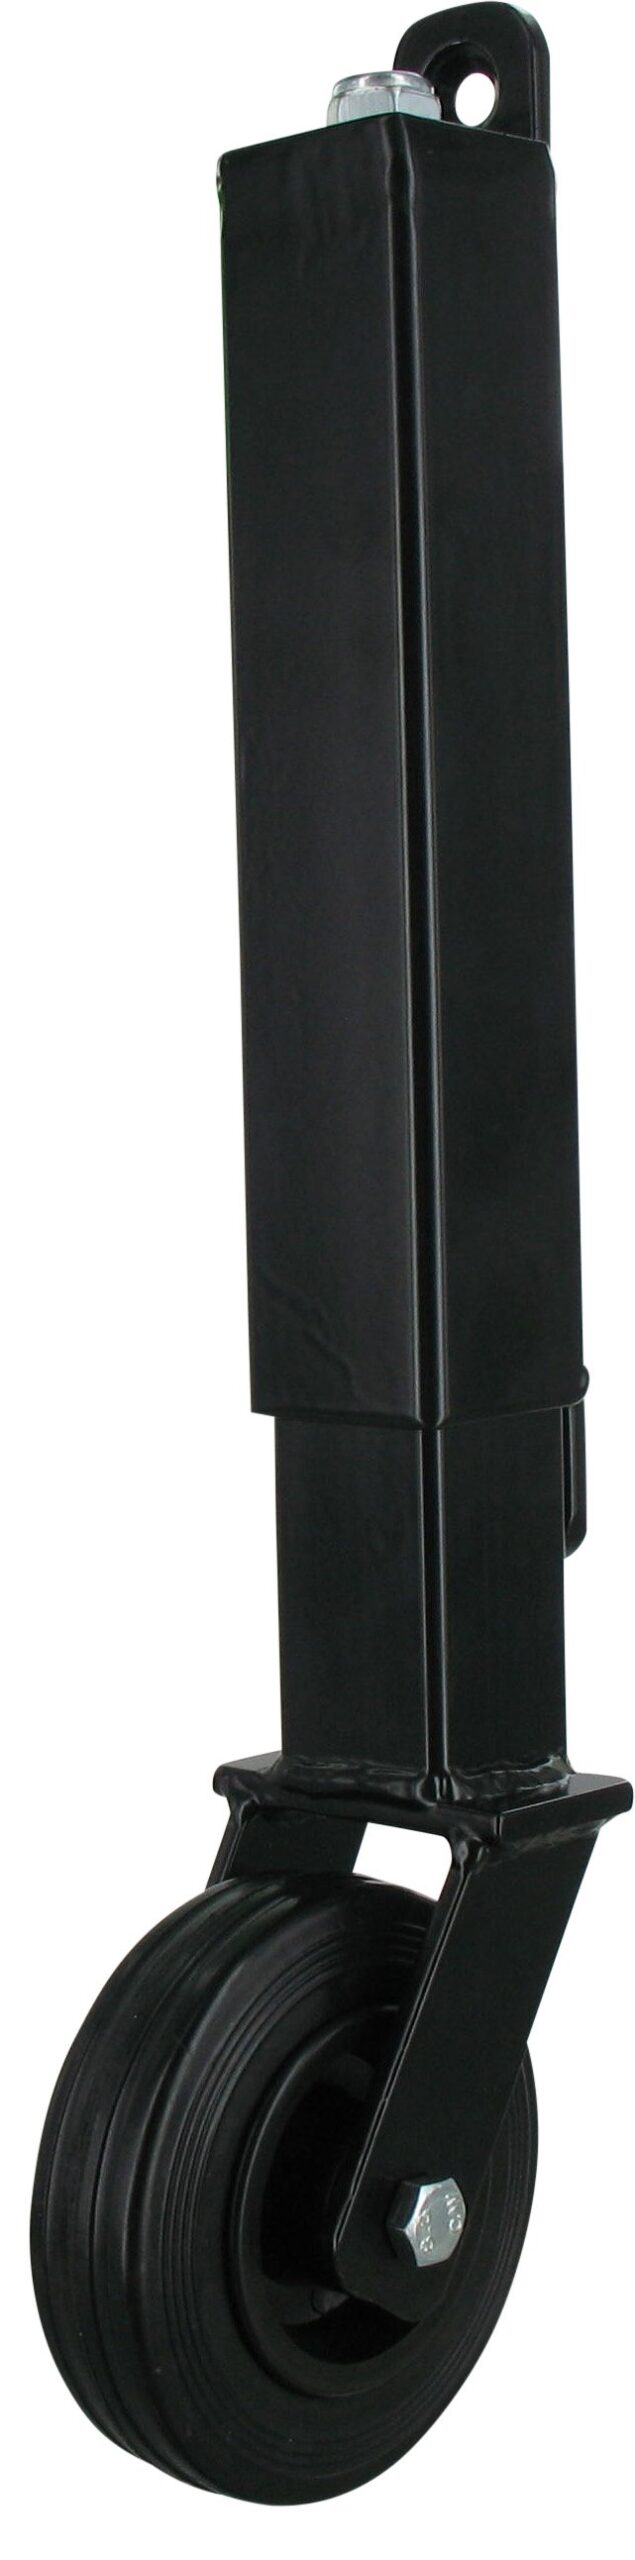 Torrolle GRK NBF Serie, Ø100x30mm, Stahl, geschweißt, schwarz, 70 KG Tragfähigkeit, 401043